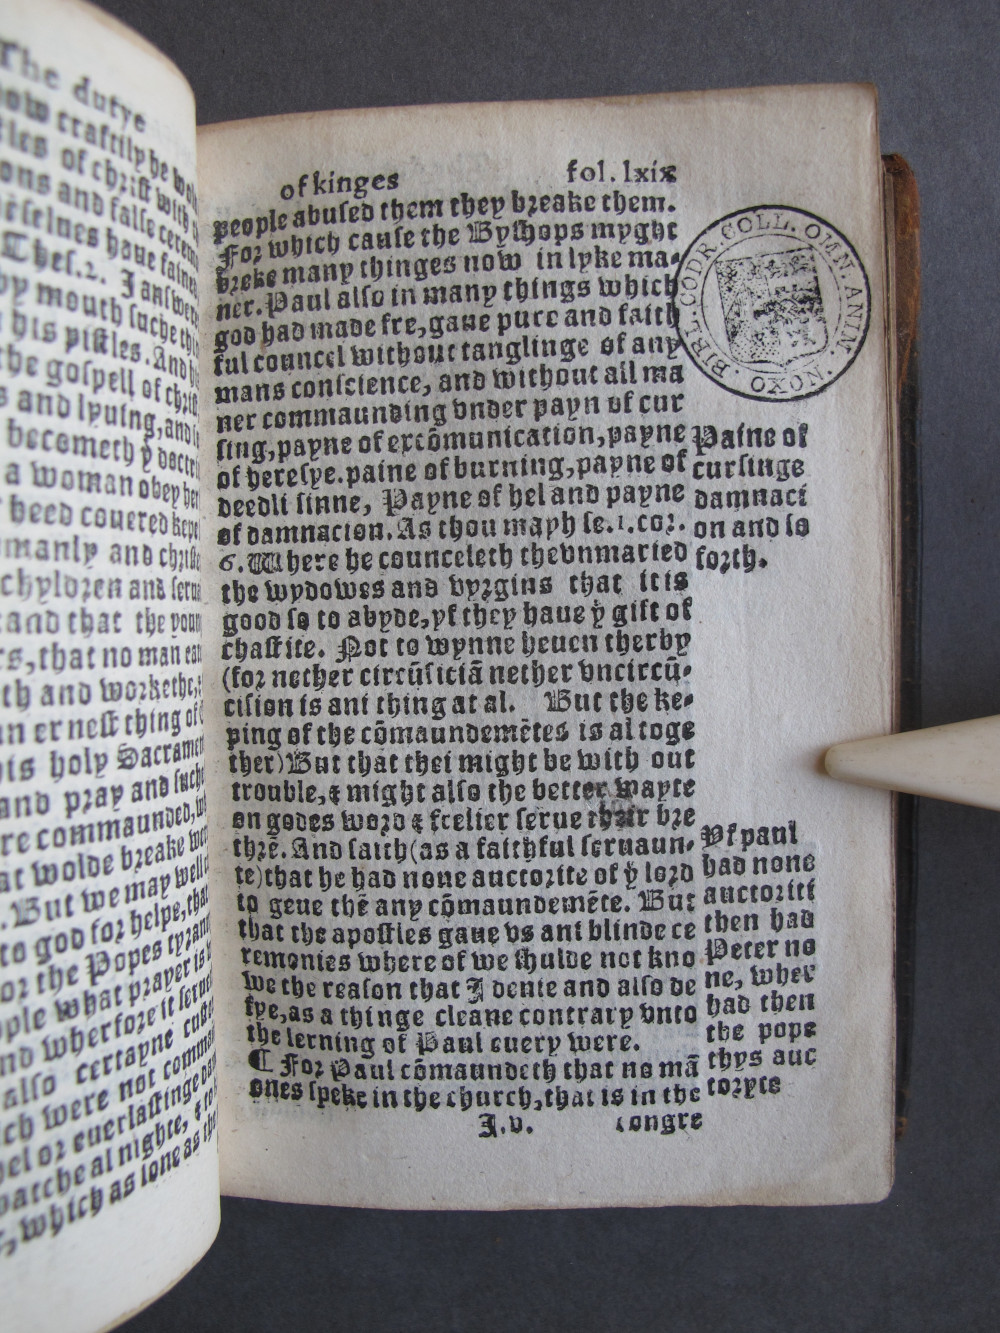 1 Folio I5 recto